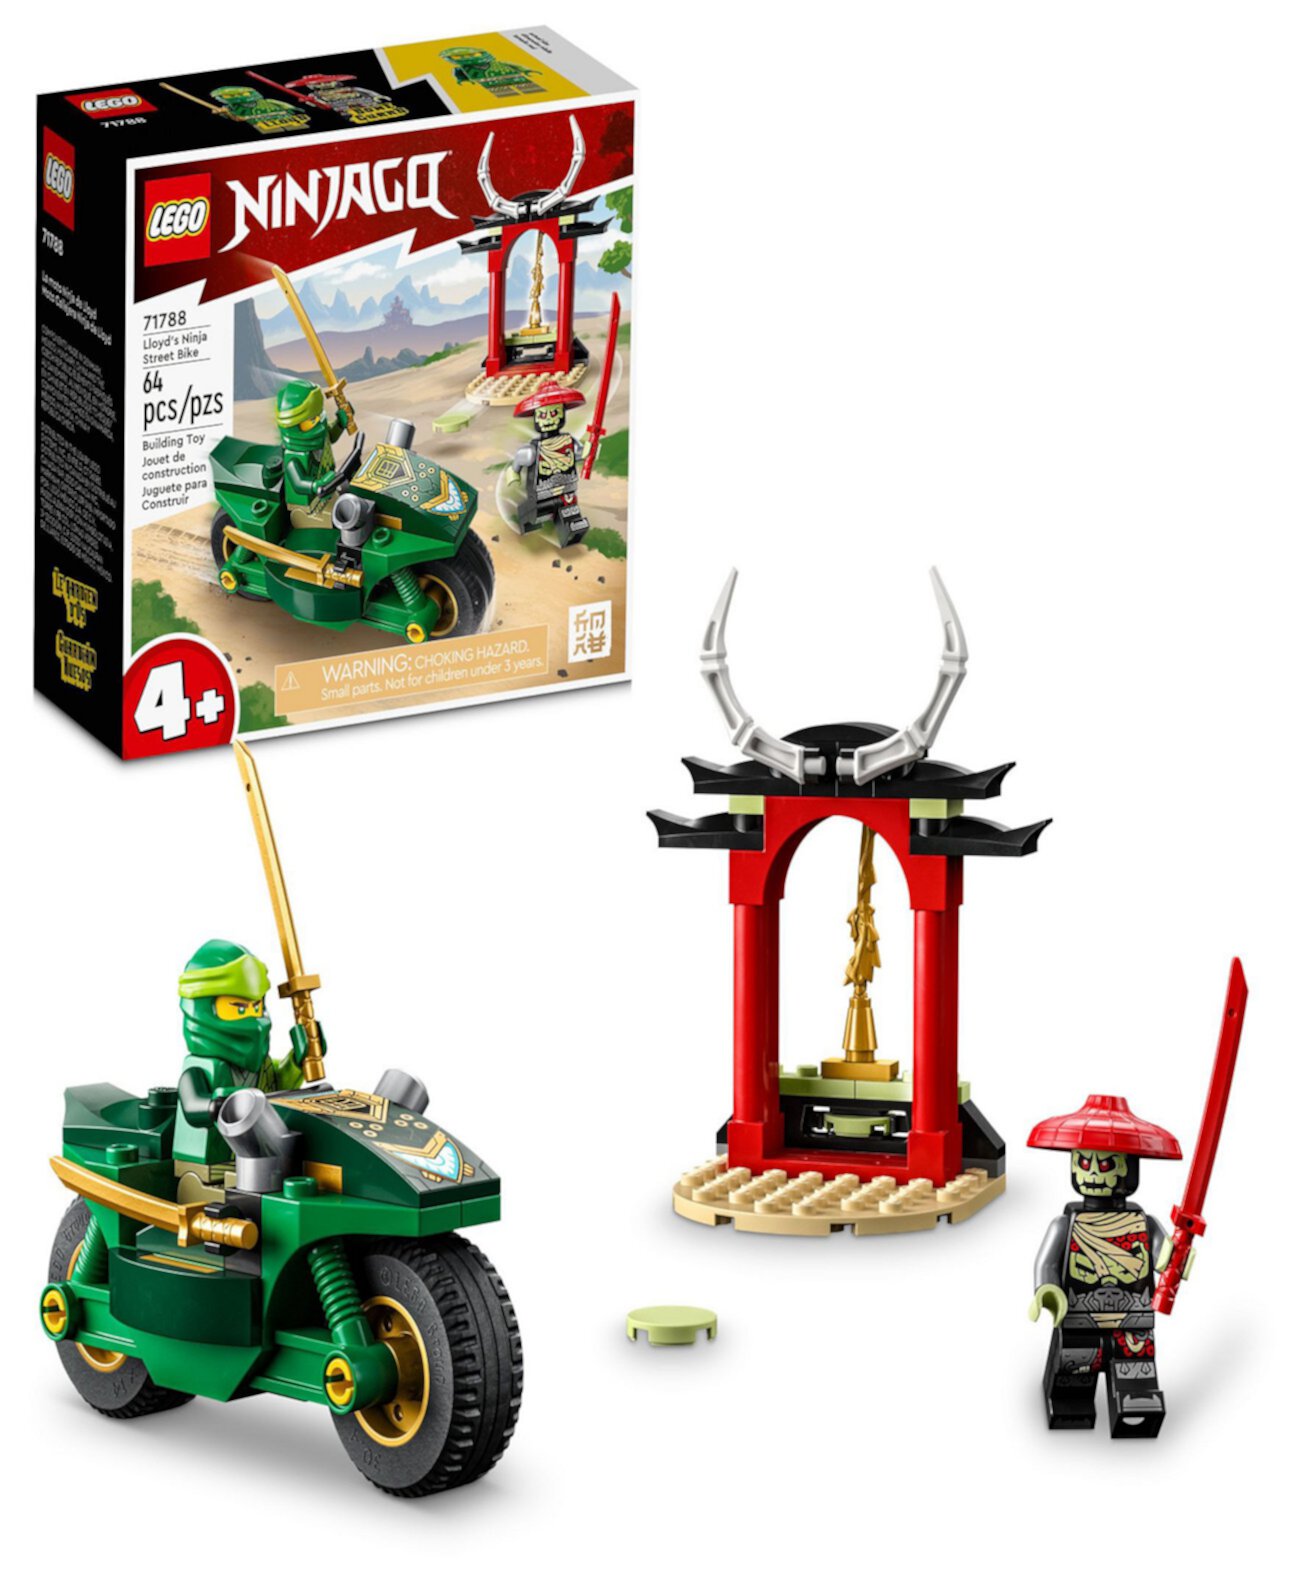 Ninjago Lloyd’s Ninja Street Bike 71788 Набор игрушек с фигурками Ллойда и Костяного стража Lego